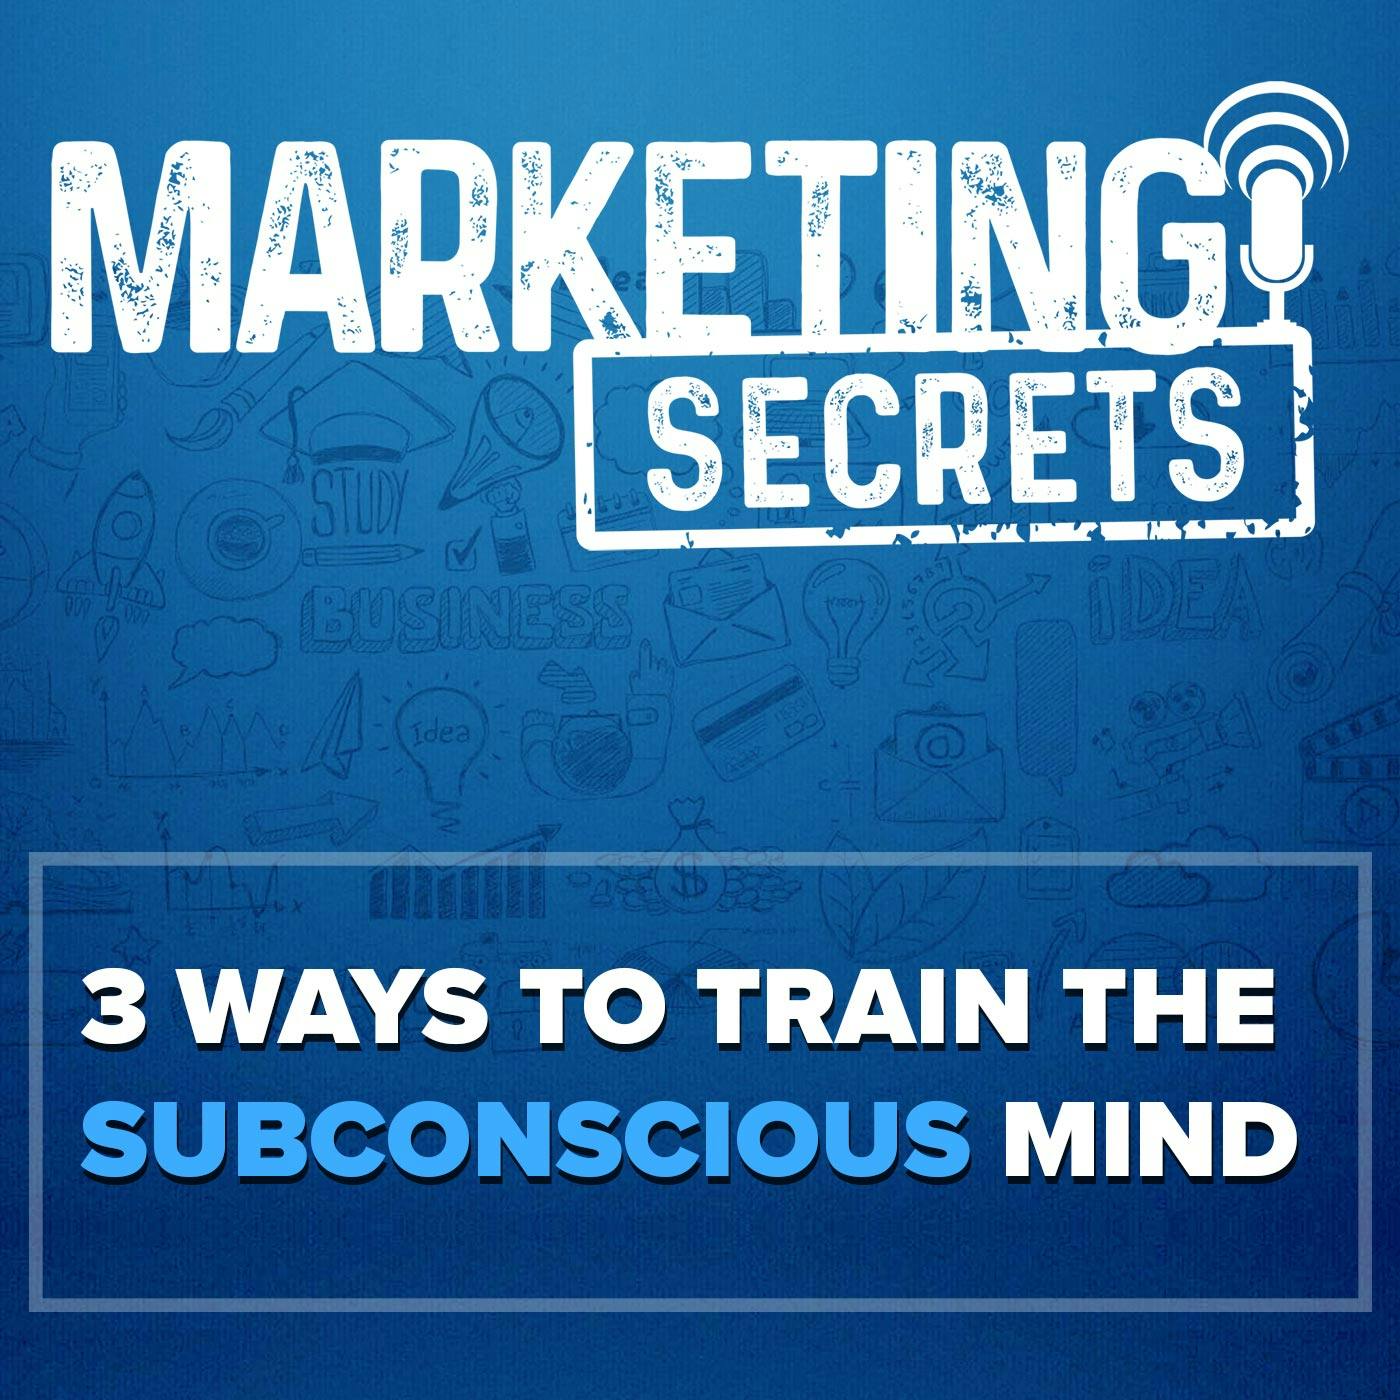 3 Ways to Train the Subconscious Mind